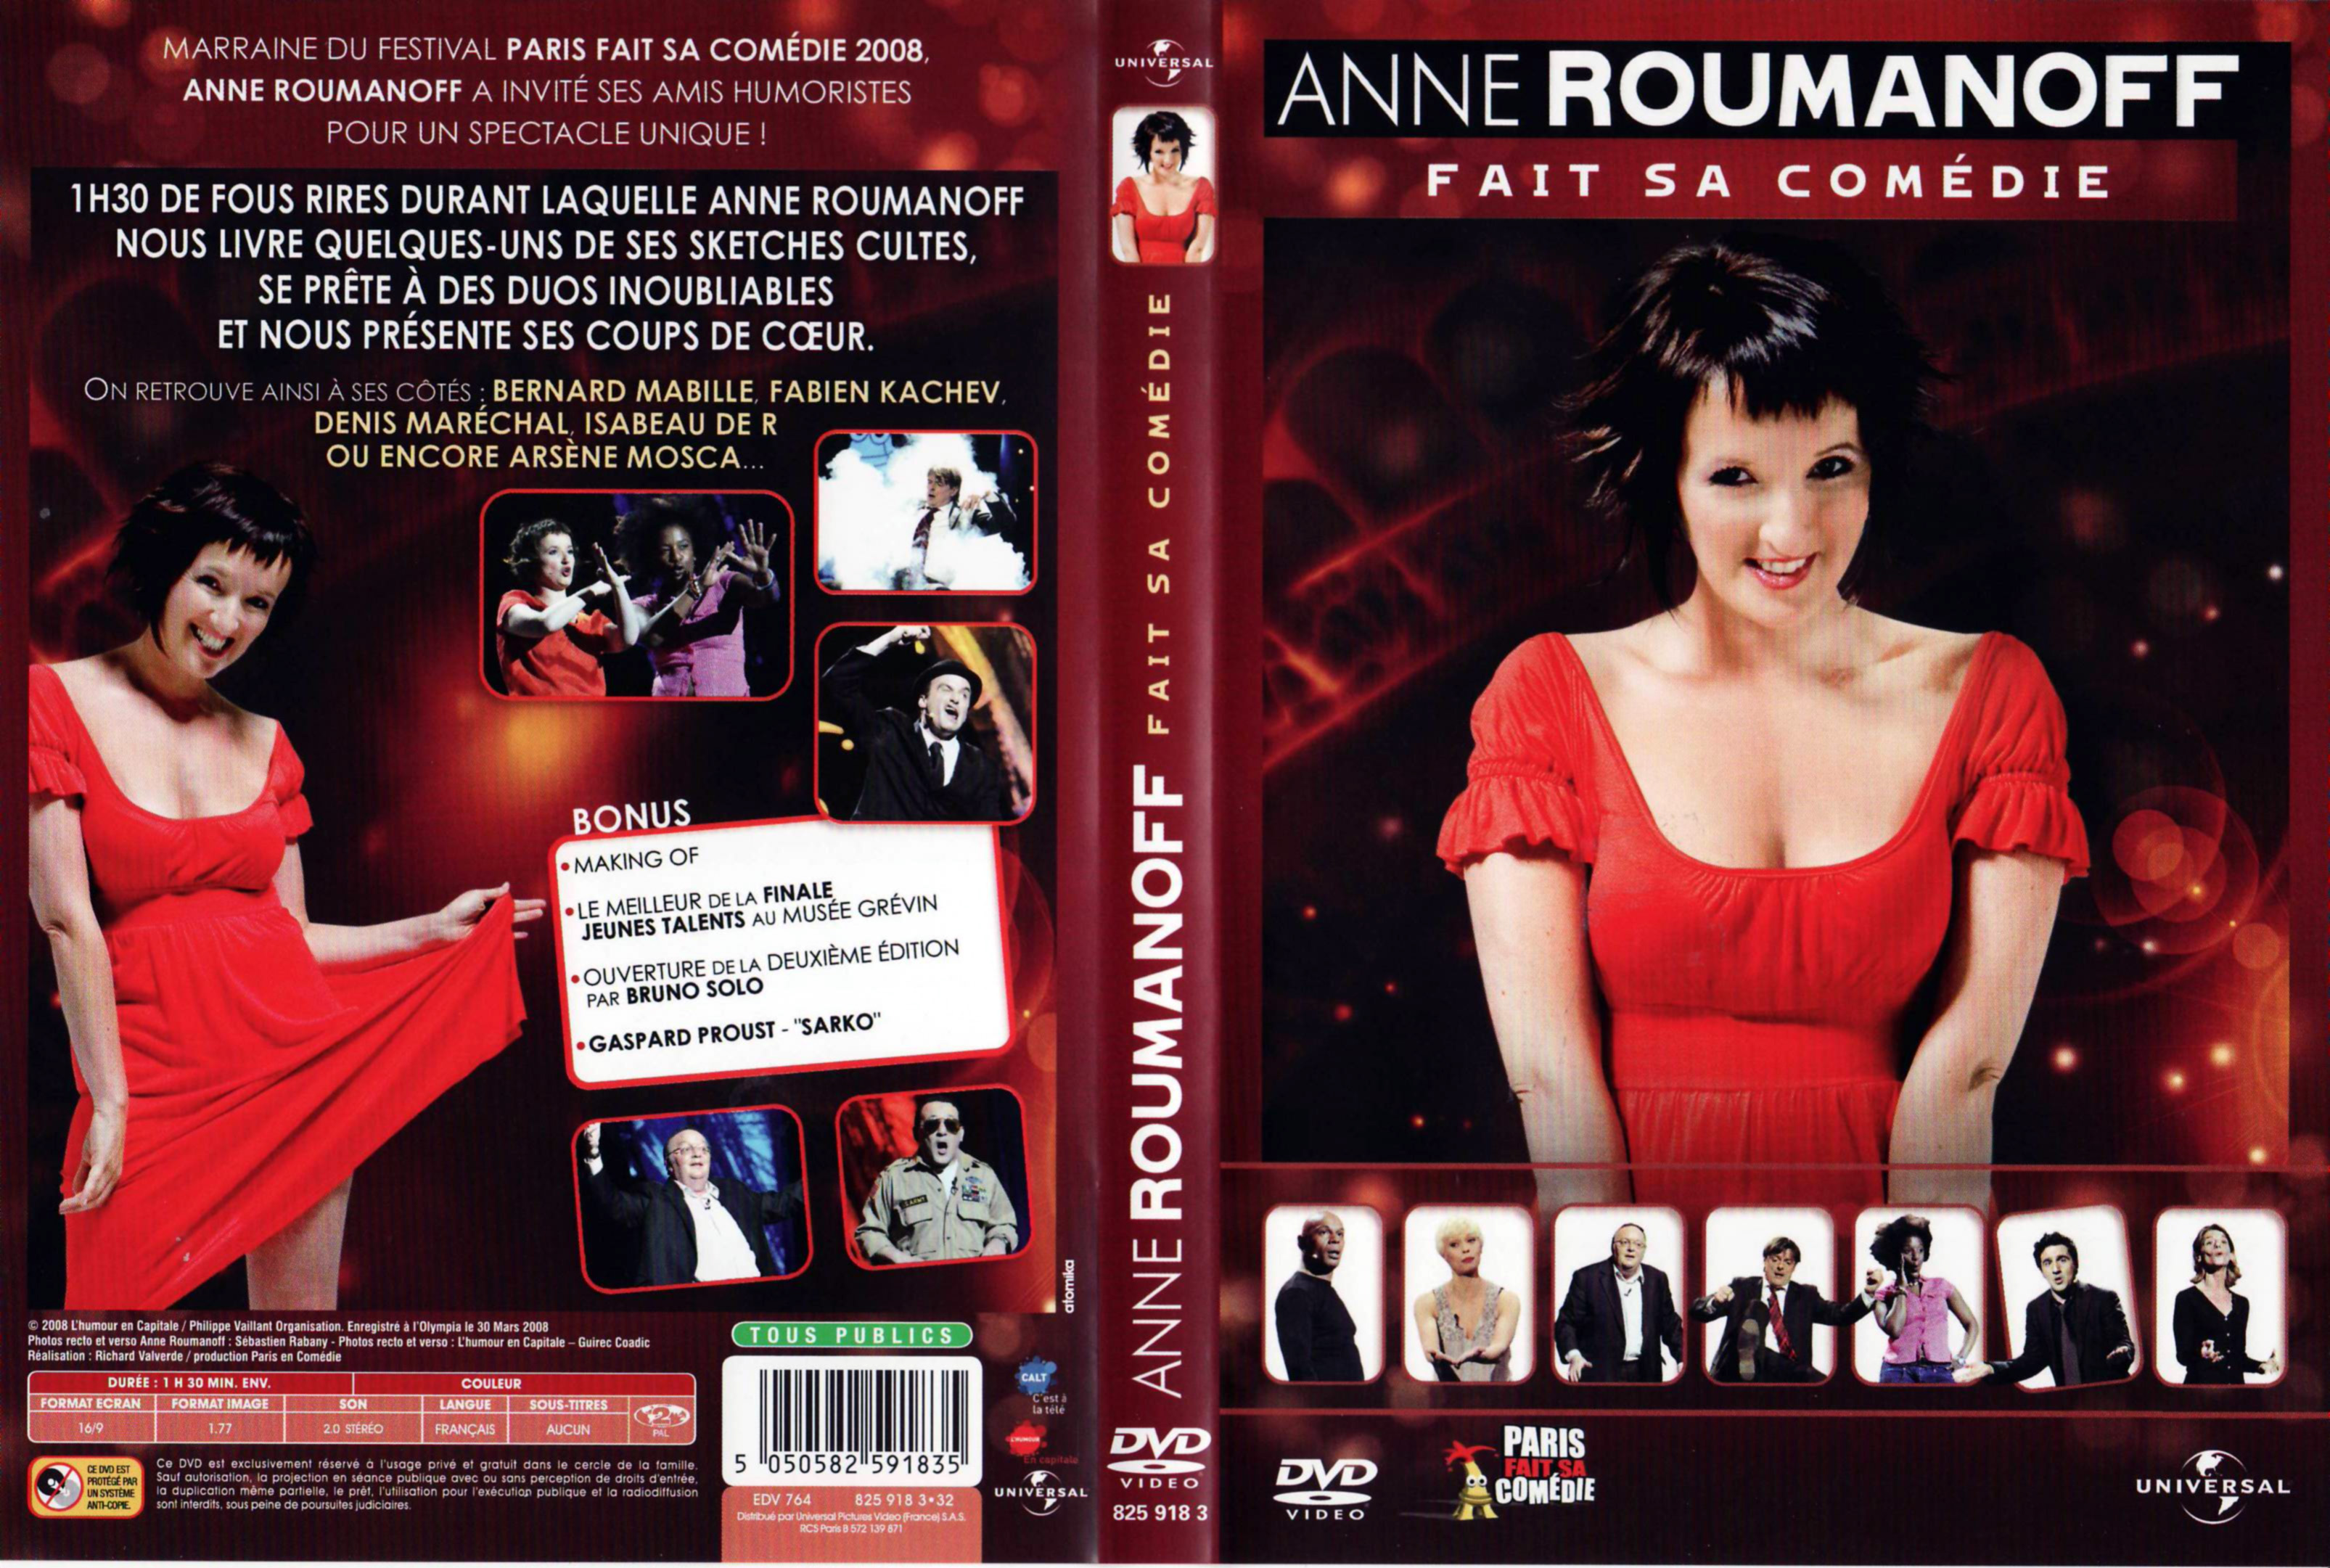 Jaquette DVD Anne Roumanoff fait sa comdie